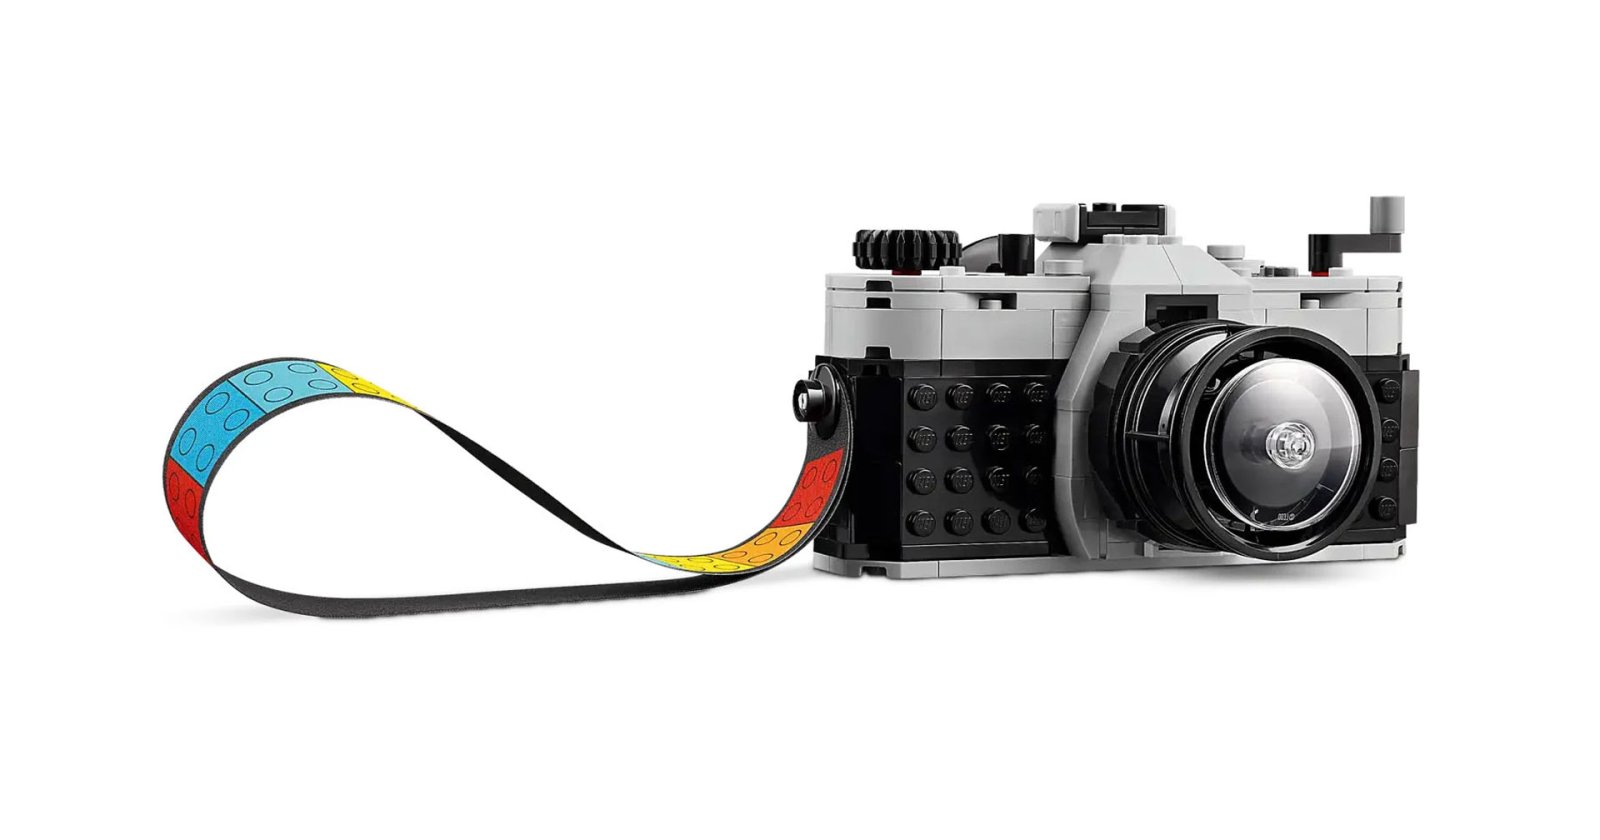 LEGO เปิดตัวชุดตัวต่อ Retro Camera เอาใจคนรักกล้องและสายสะสม